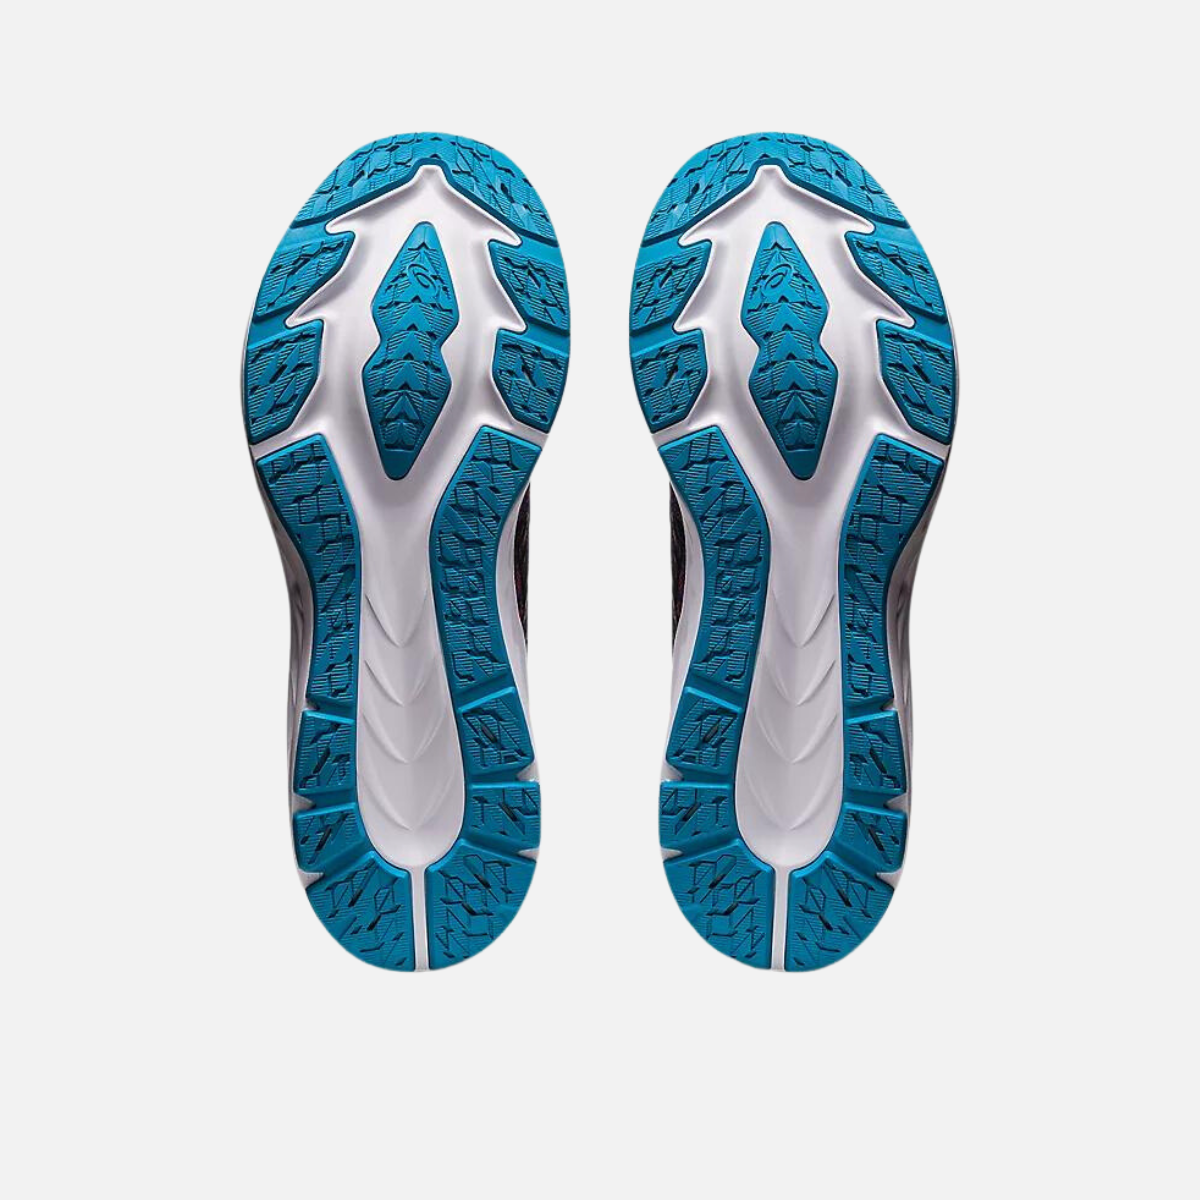 Asics DYNABLAST 3 Men's Running Shoes -Indigo Blue/Black